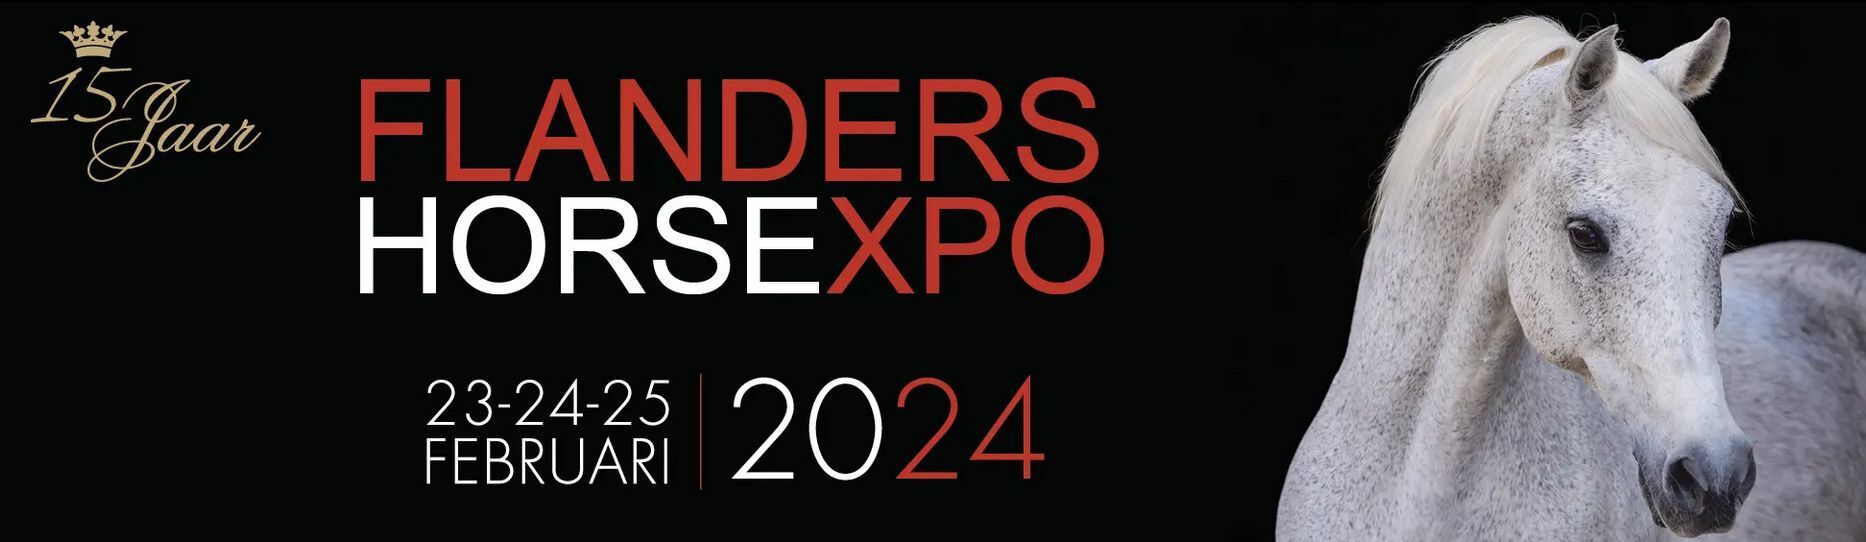 Flanders Horse Expo 2024